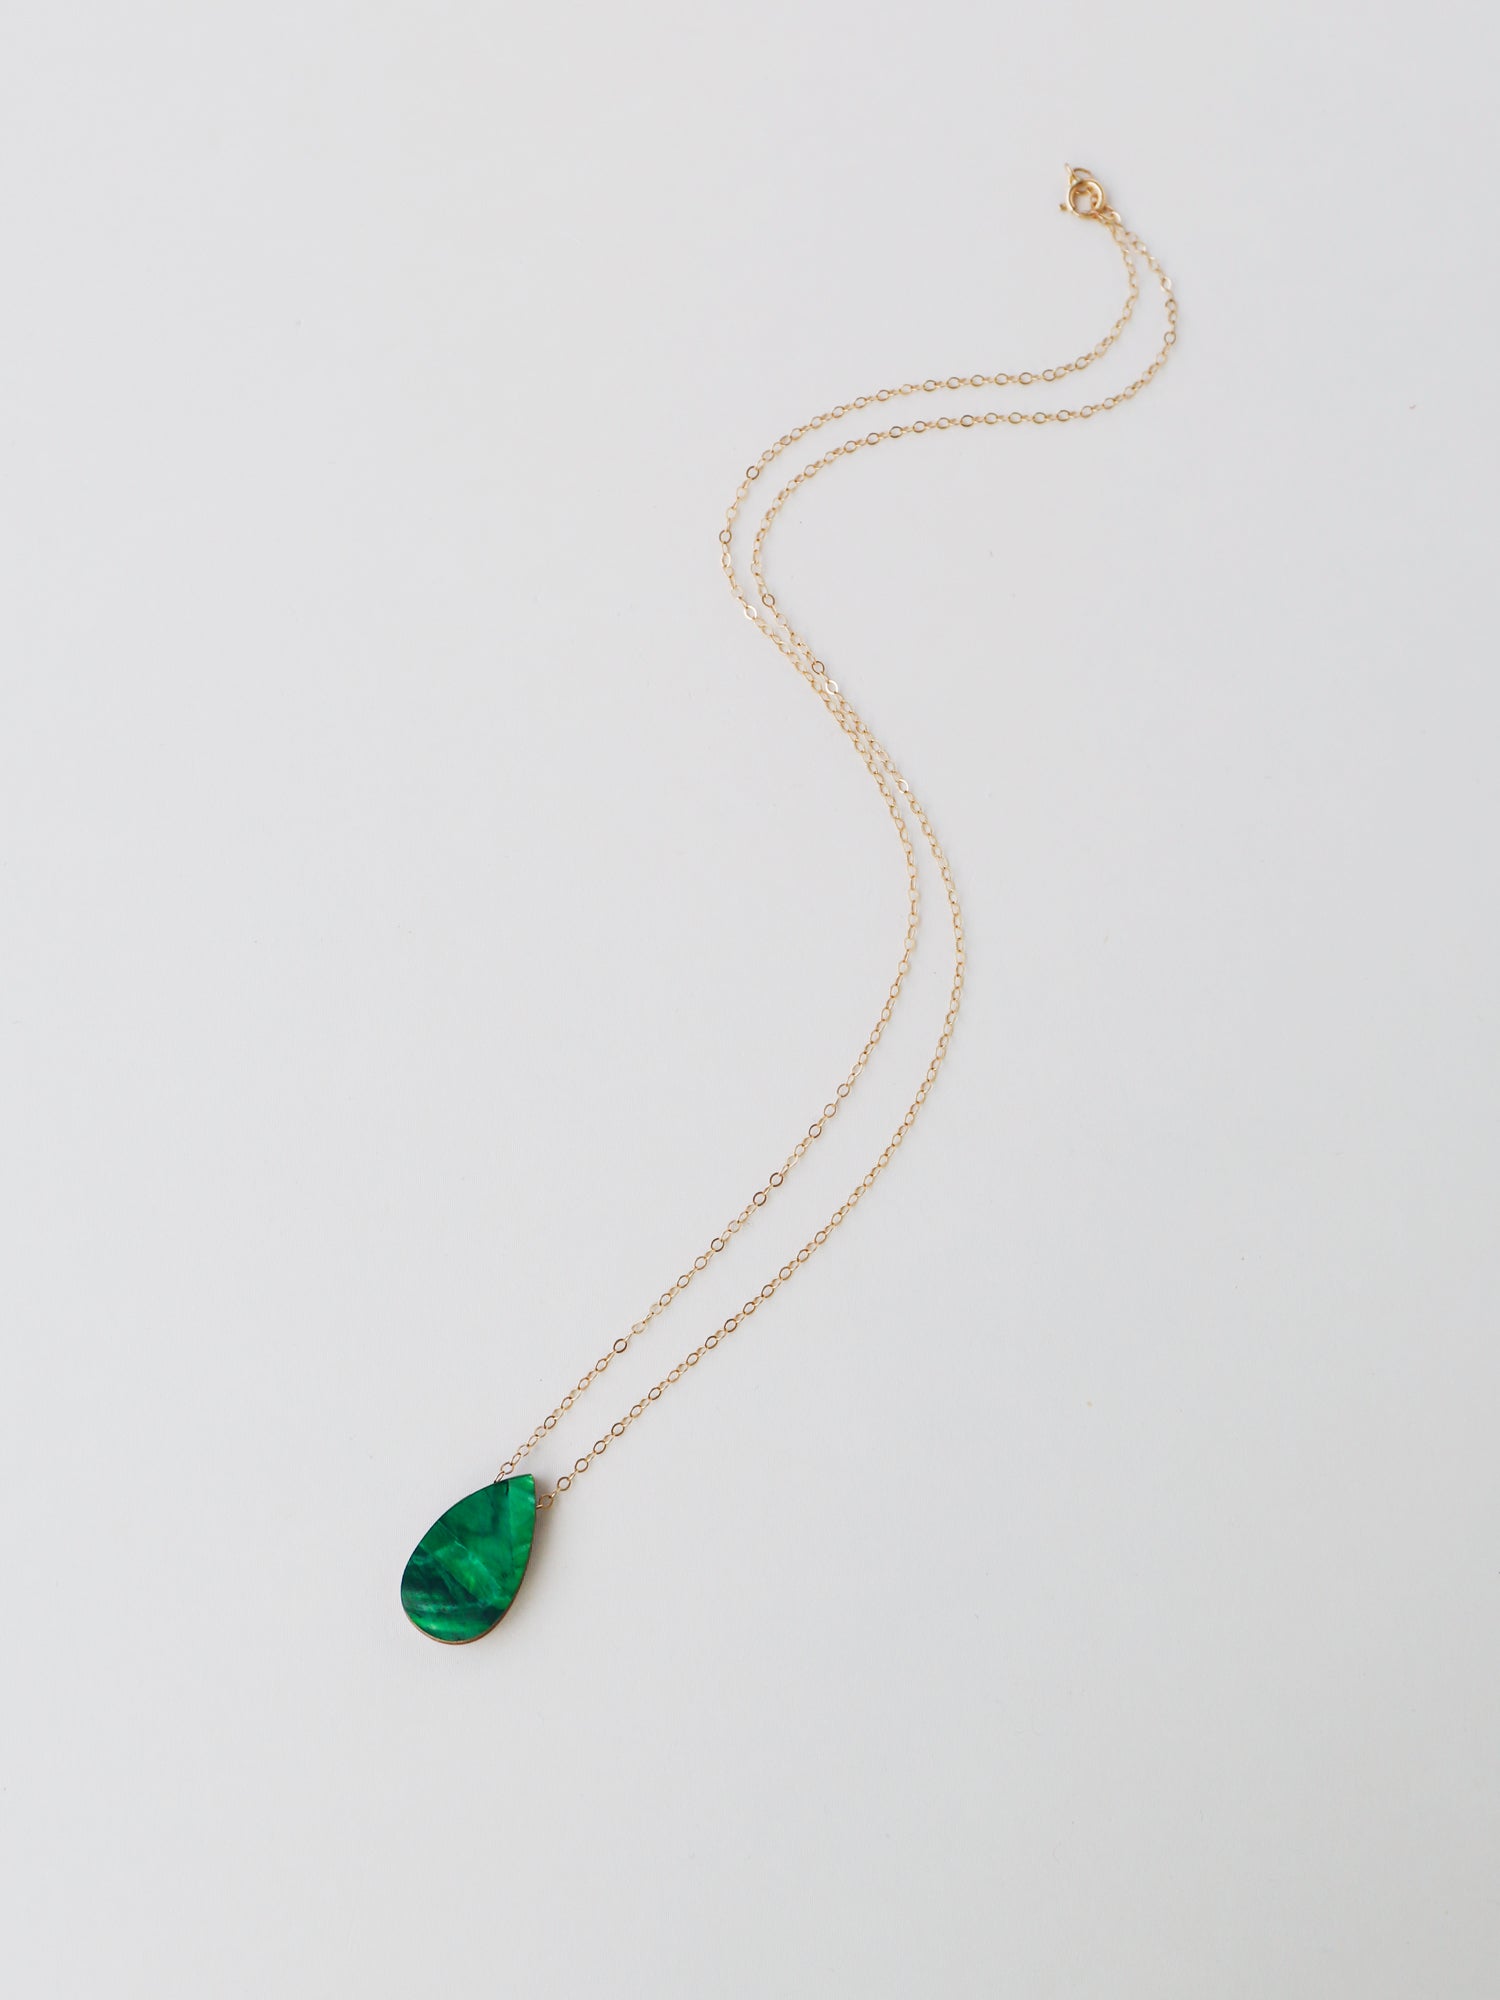 Raindrop Necklace in Emerald